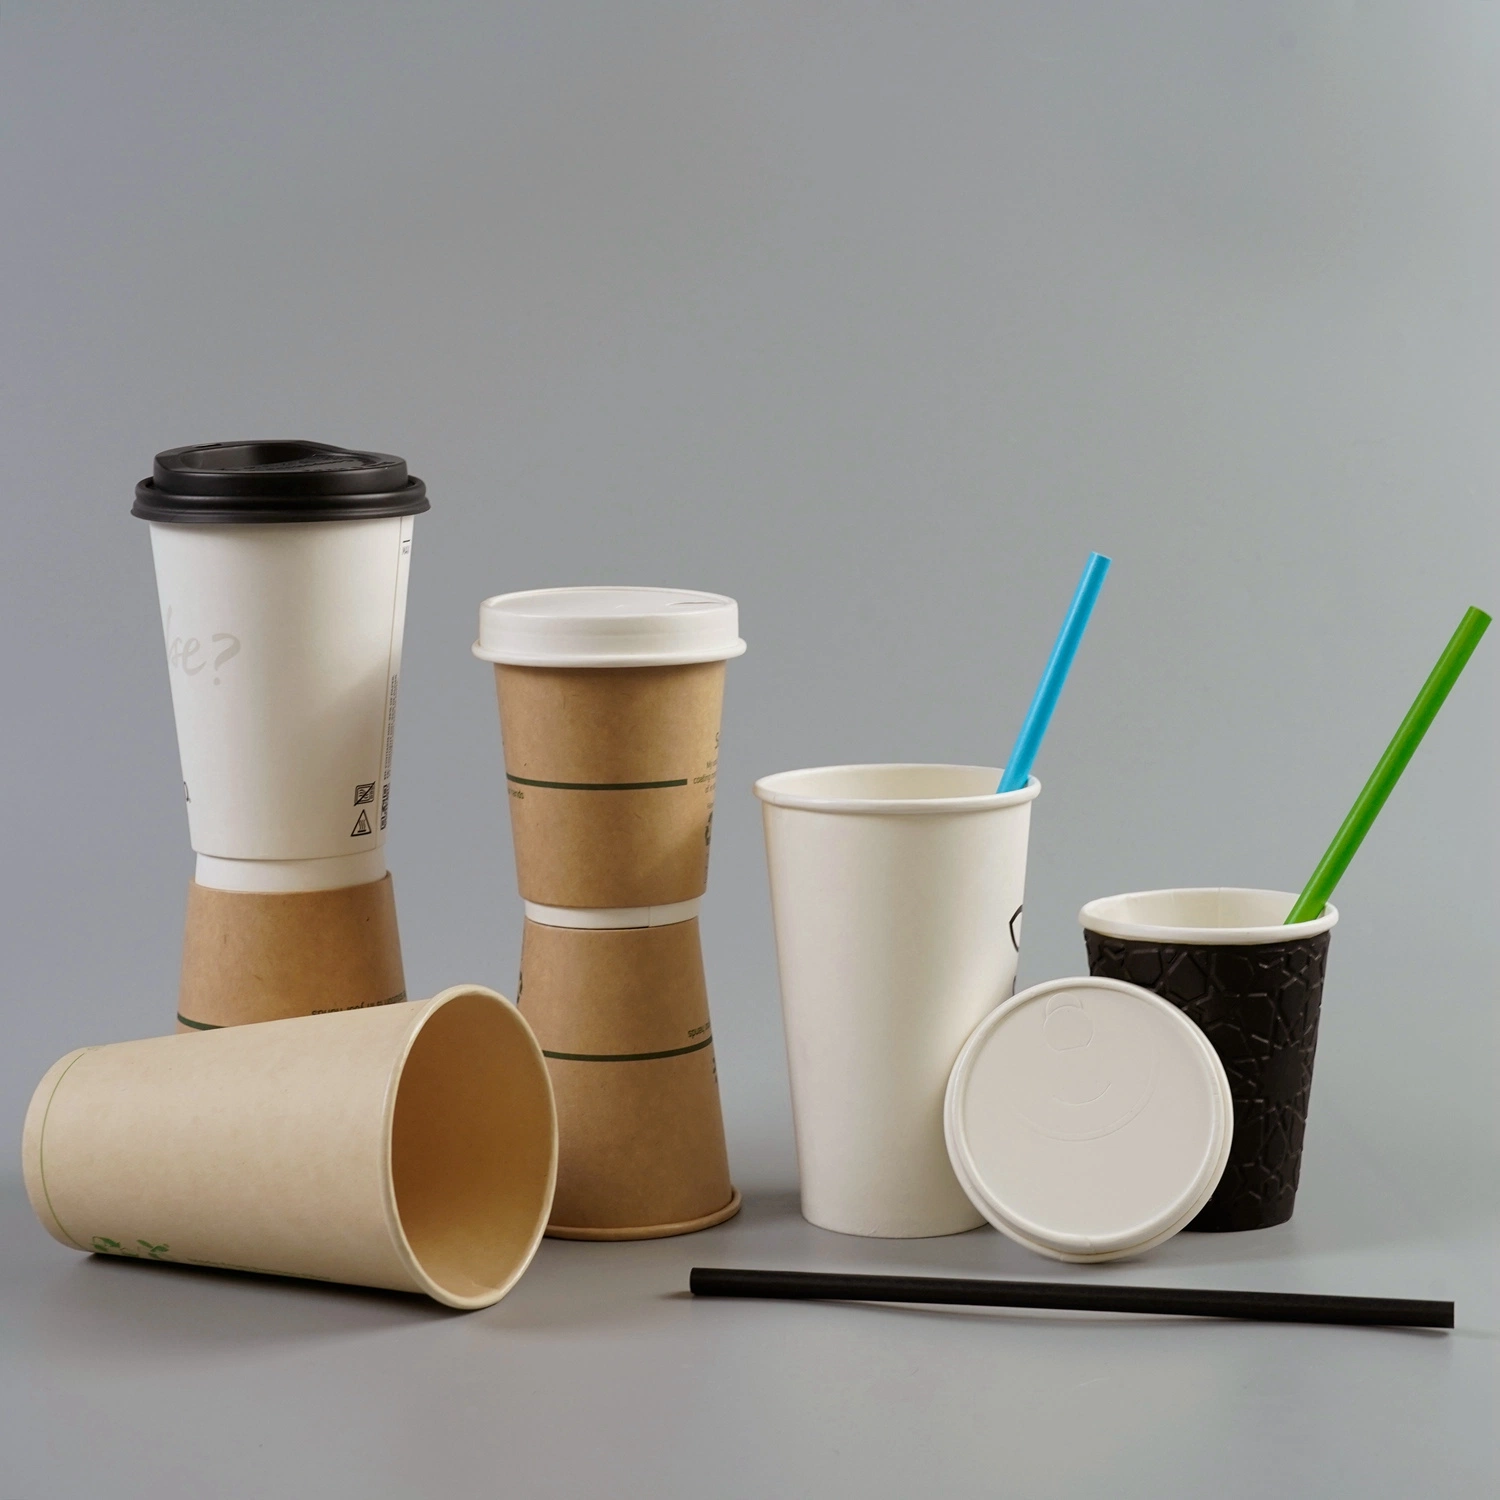 Biodegradable Cup Market